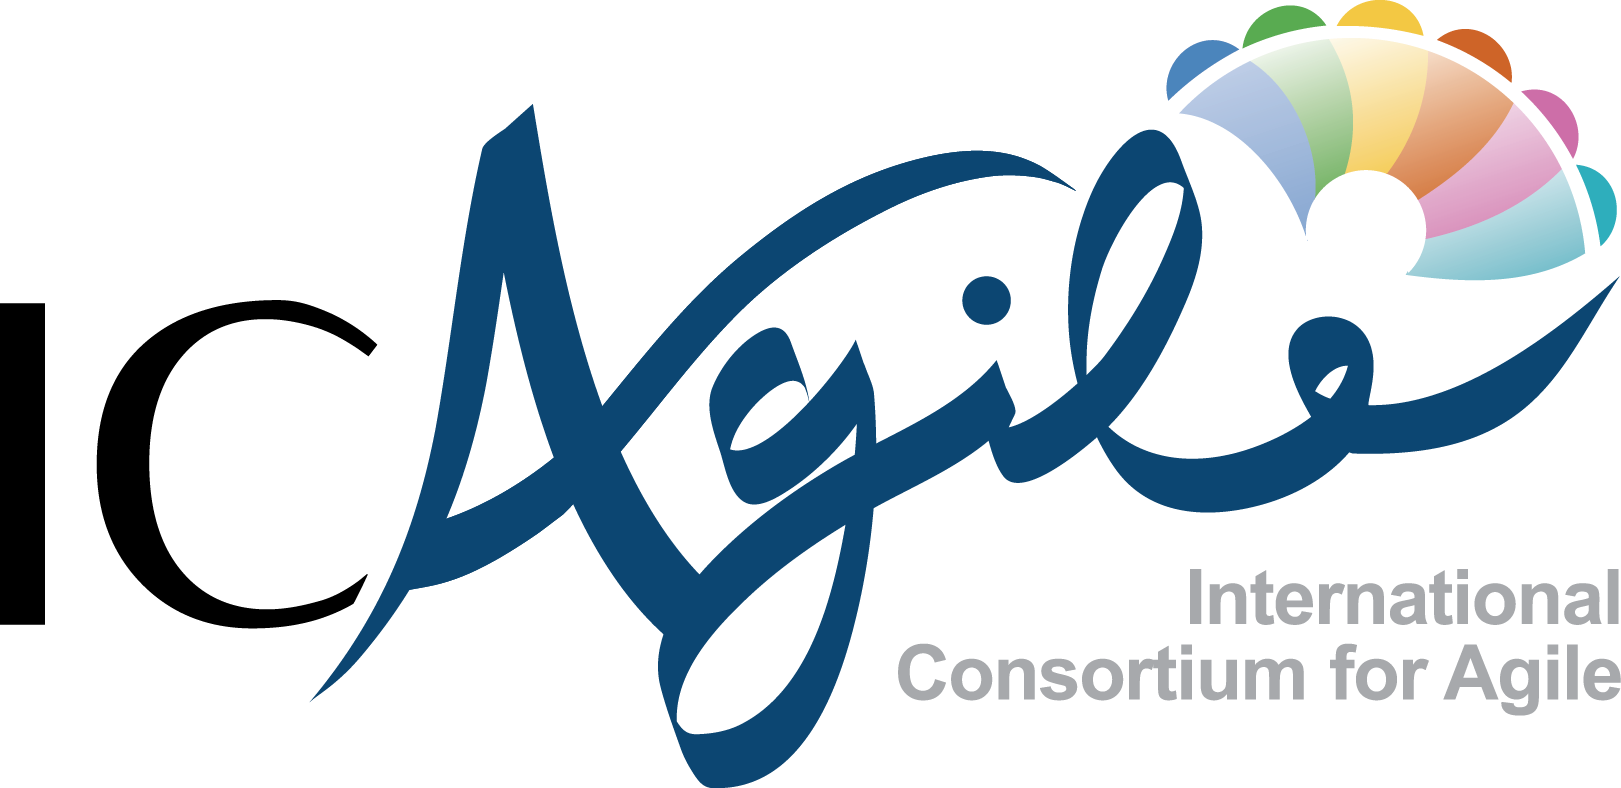 ICAgile_logo